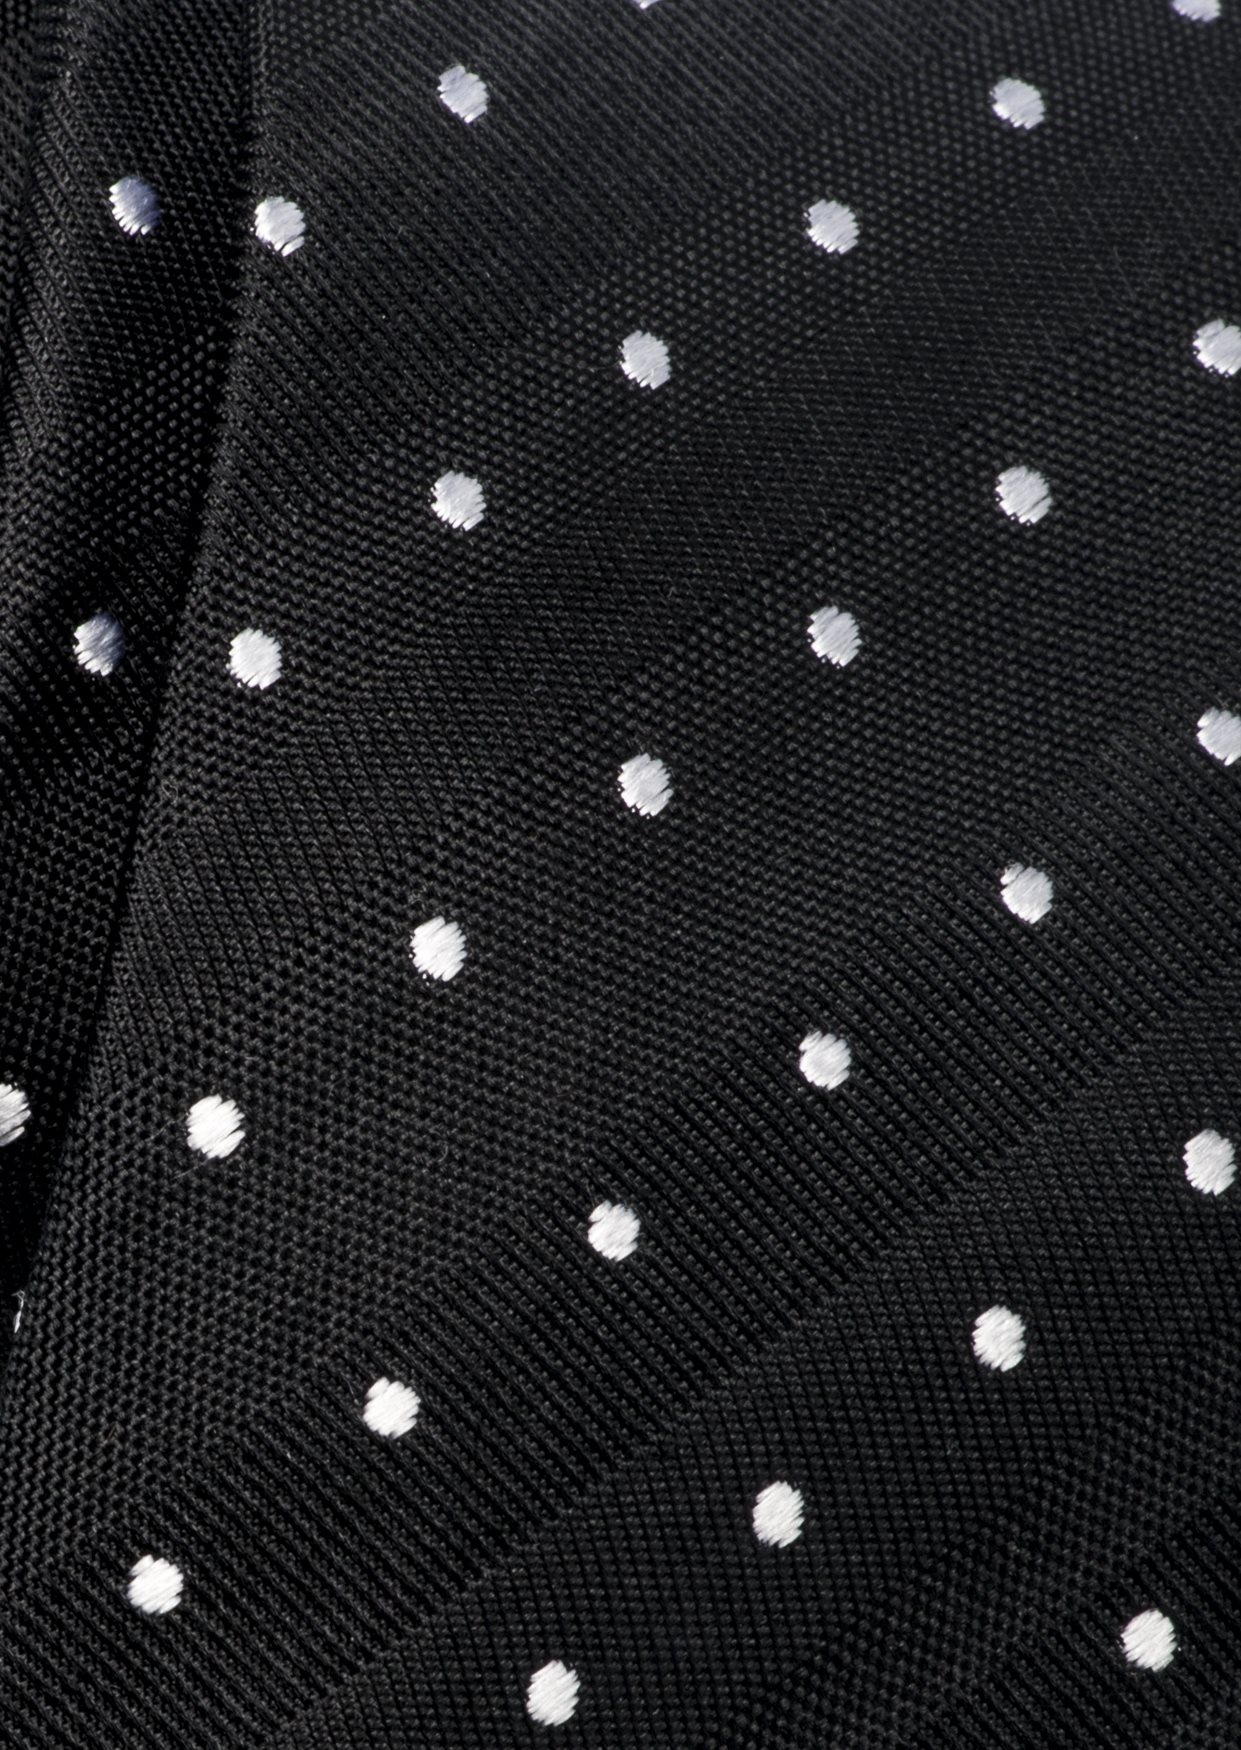 Extra lange Eterna Krawatte schwarz getupft silber weiß | ETERNA und Olymp  Hemden 68 + 72 cm Extra Lang